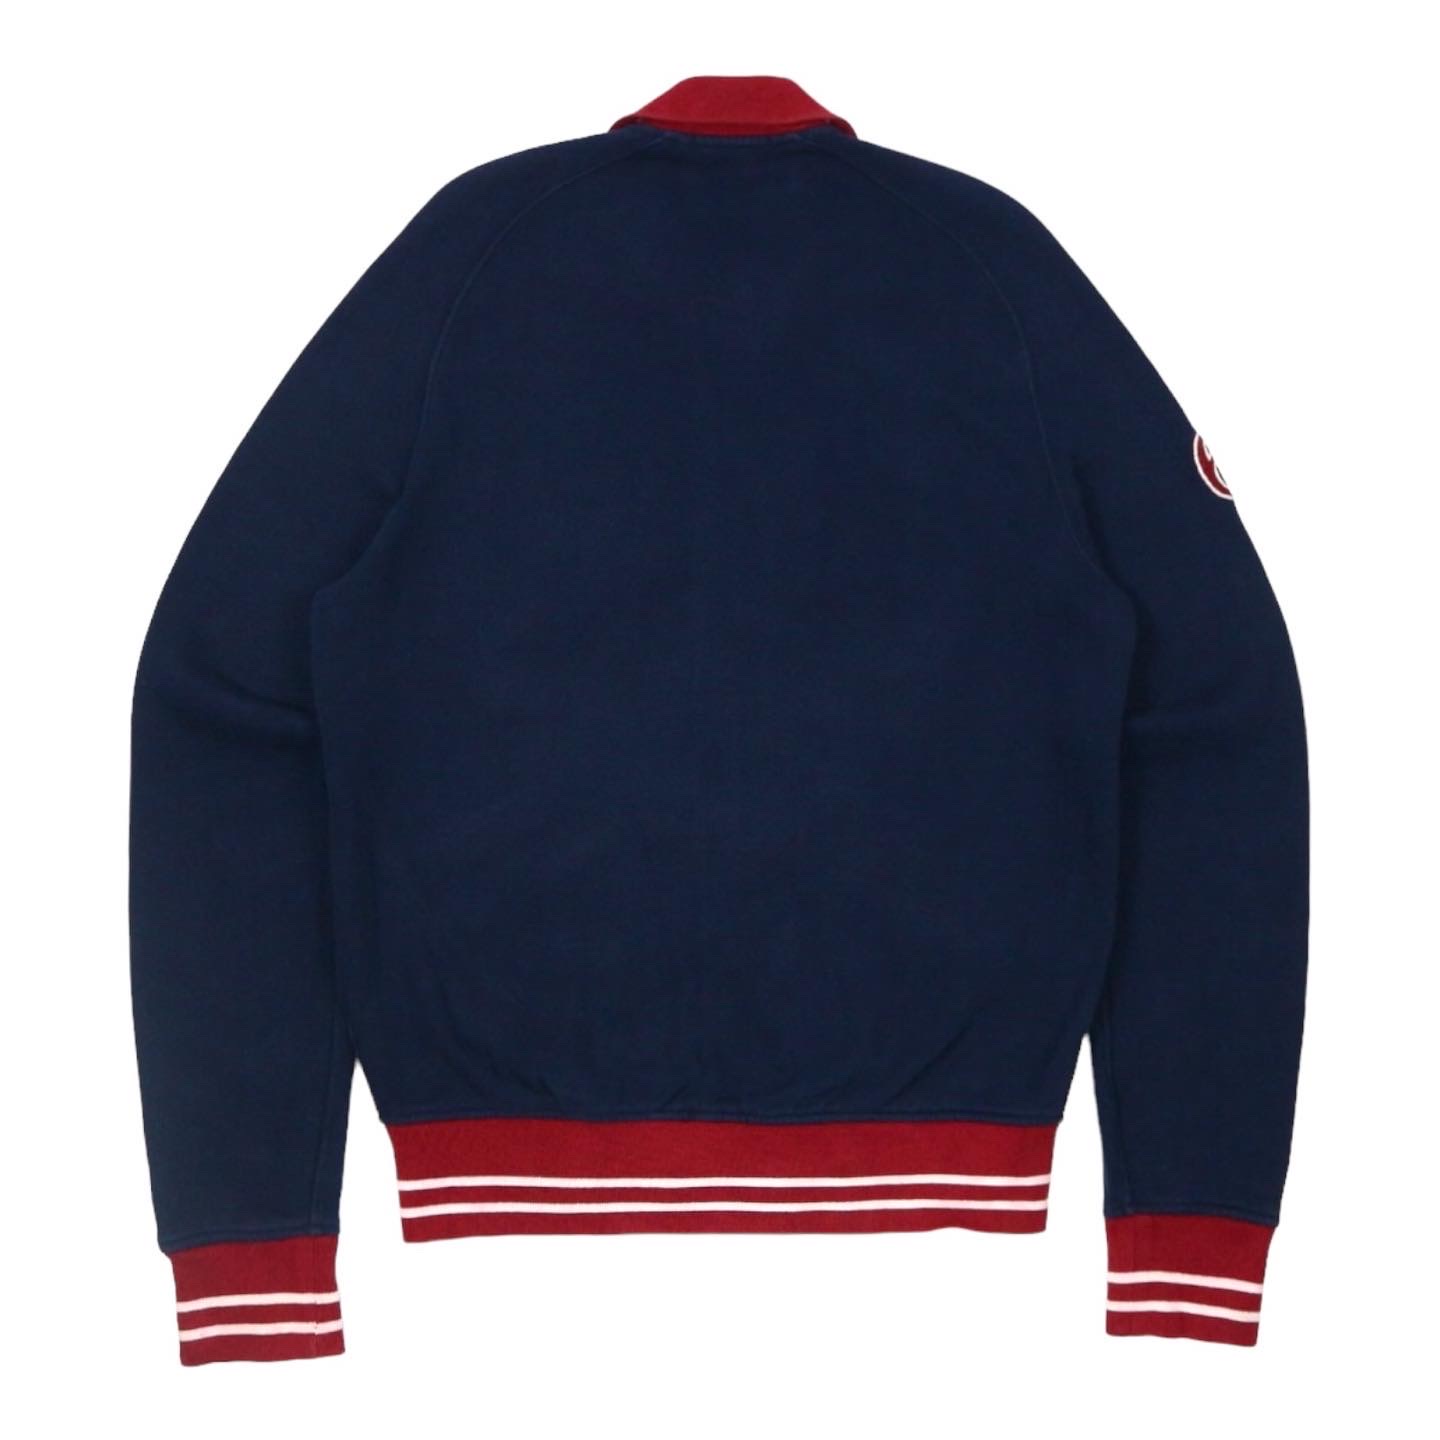 Polo by Ralph Lauren Sport Jacket Size M